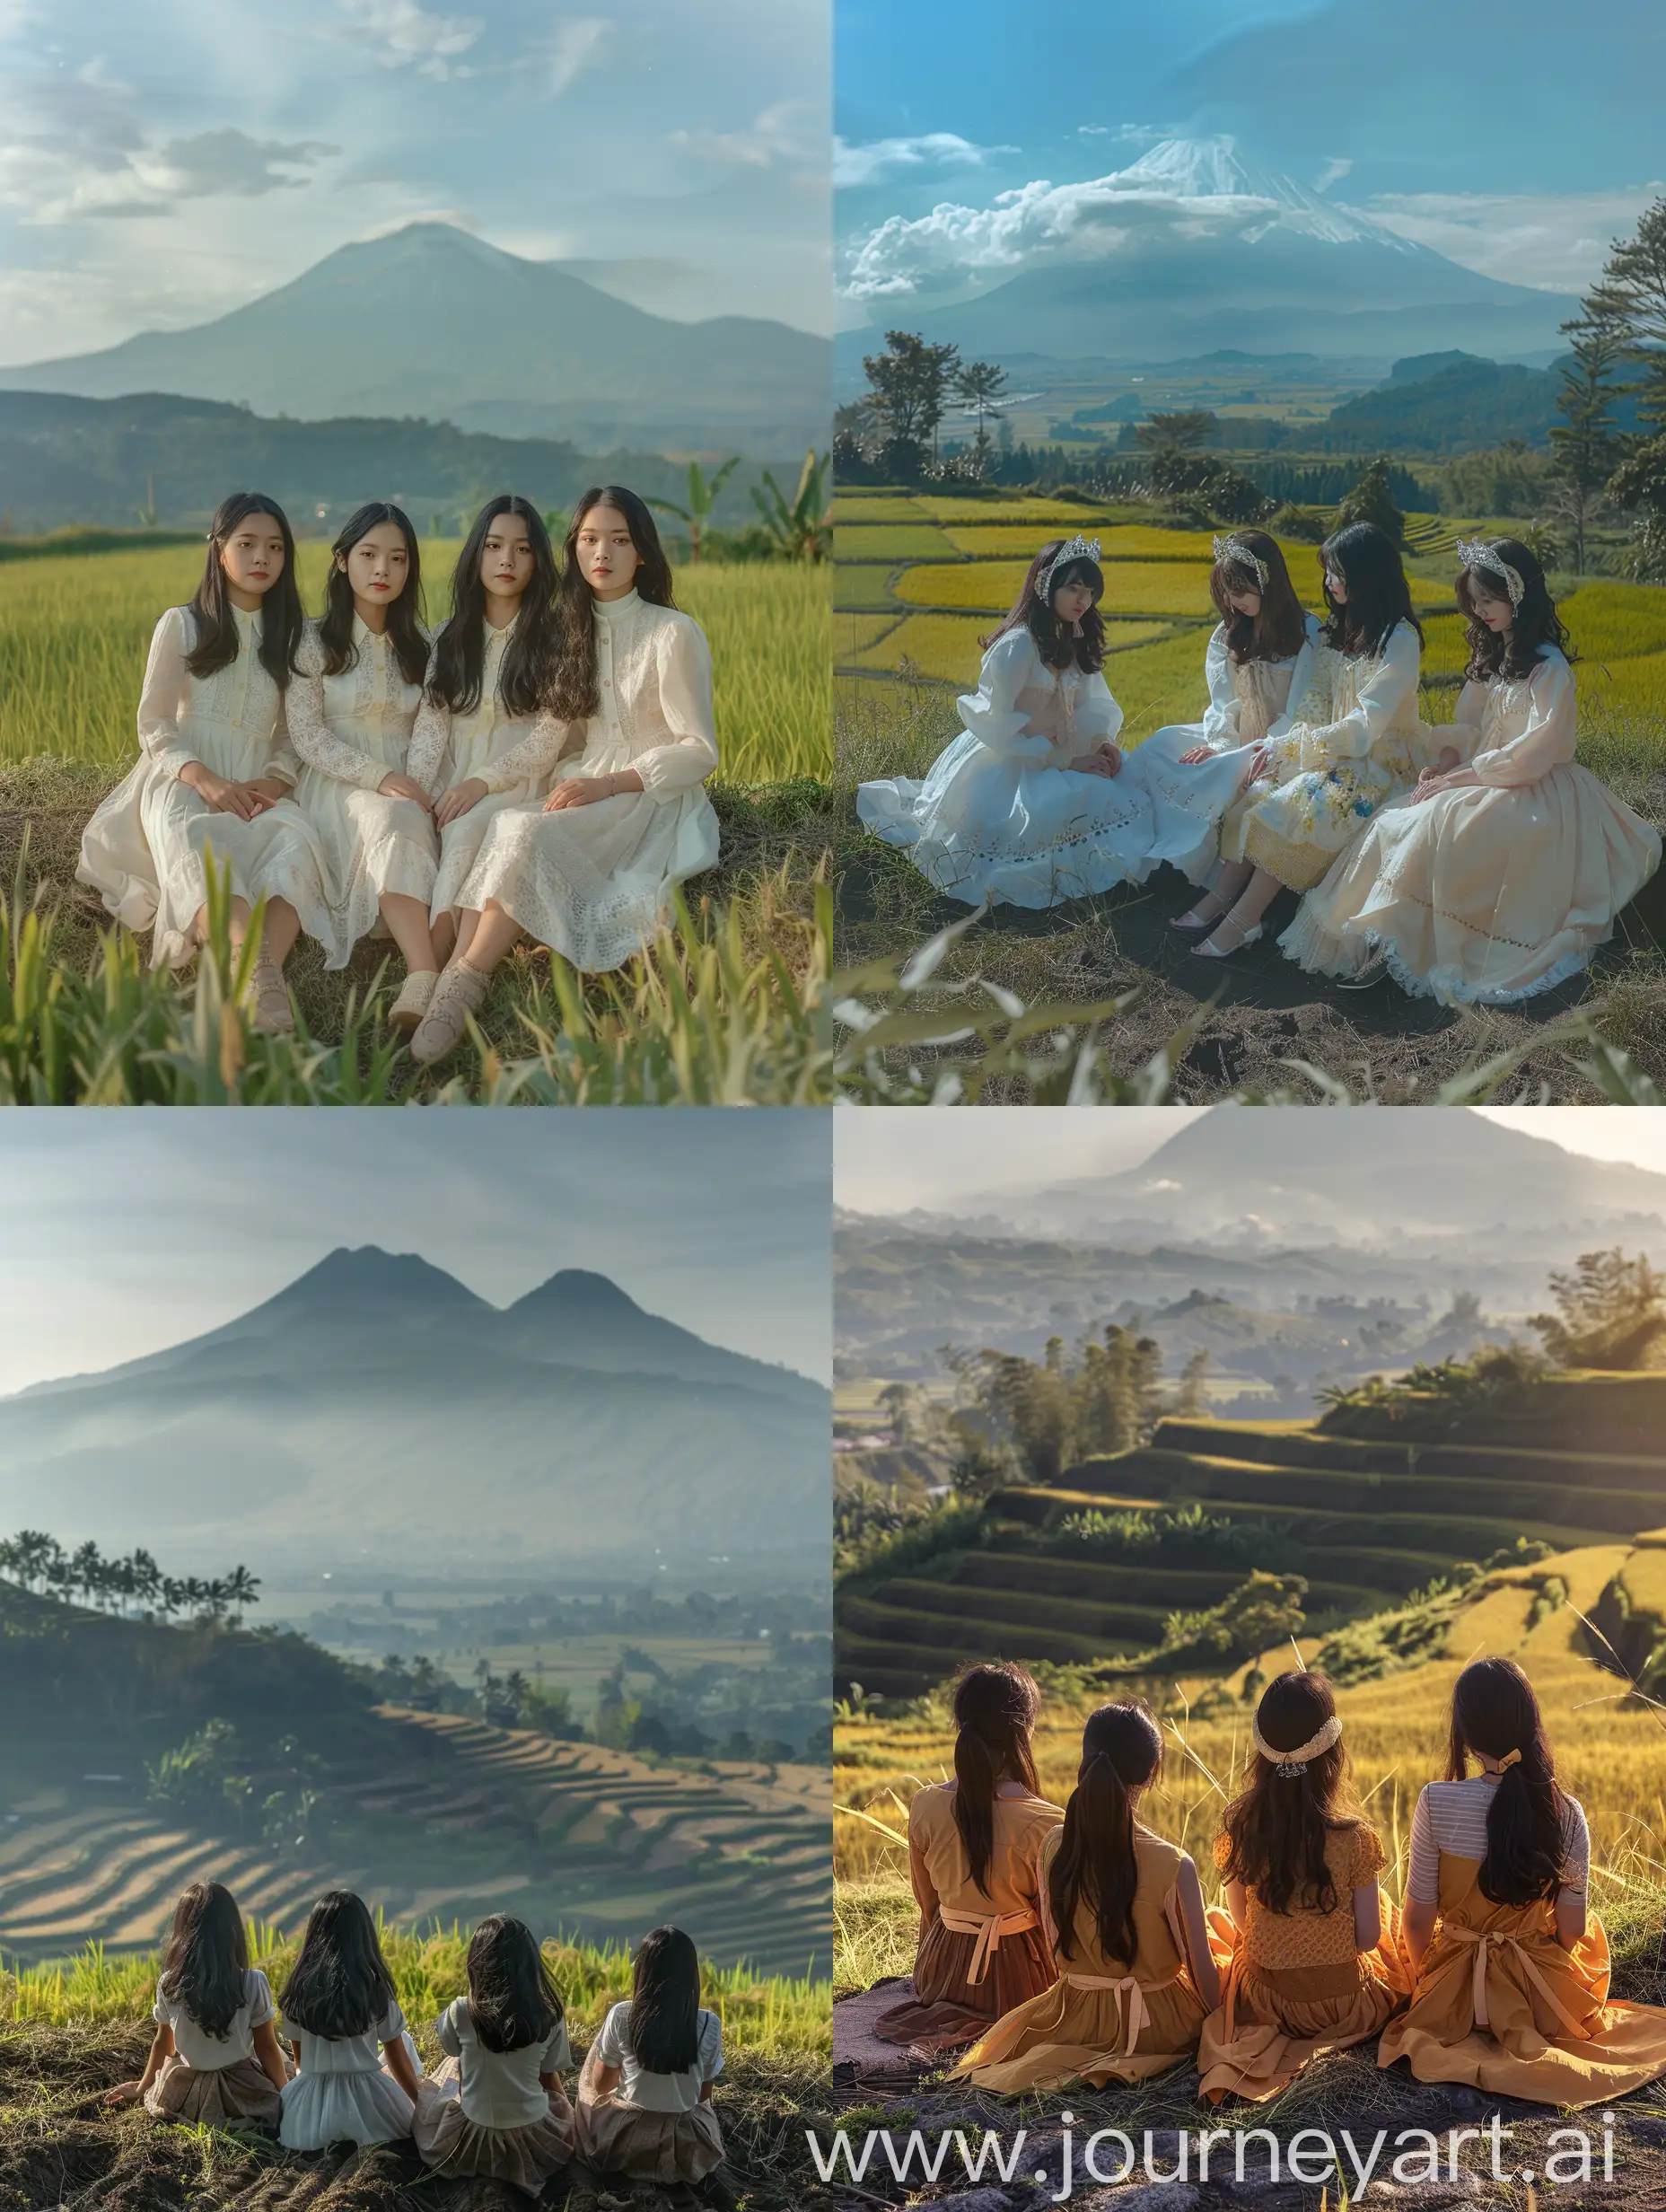 Five-Korean-Women-Enjoying-Scenic-View-of-Mount-Semeru-from-Hillside